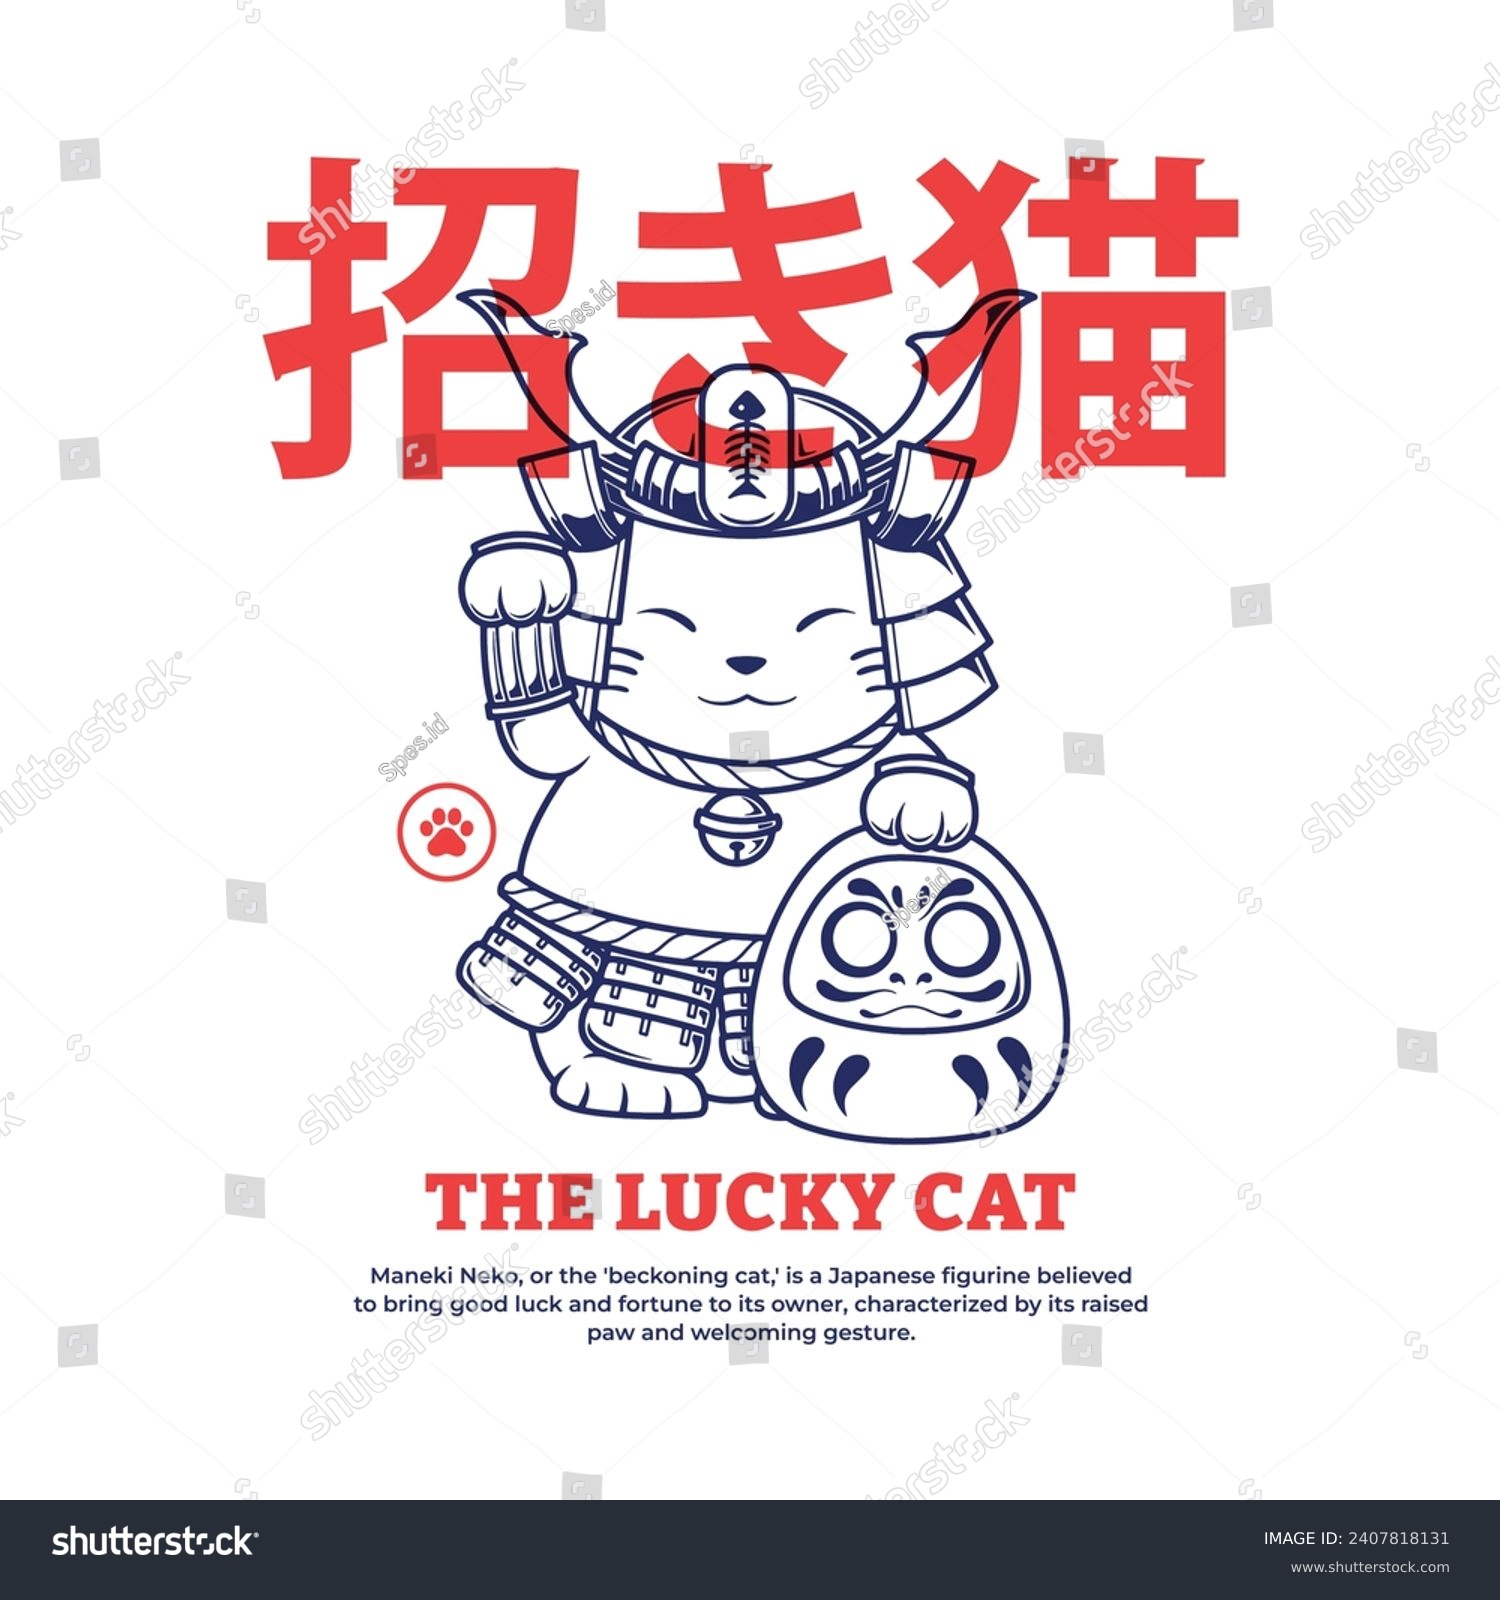 SVG of Japanese Maneki Neko Lucky Cat illustration t shirt design. Translation: 